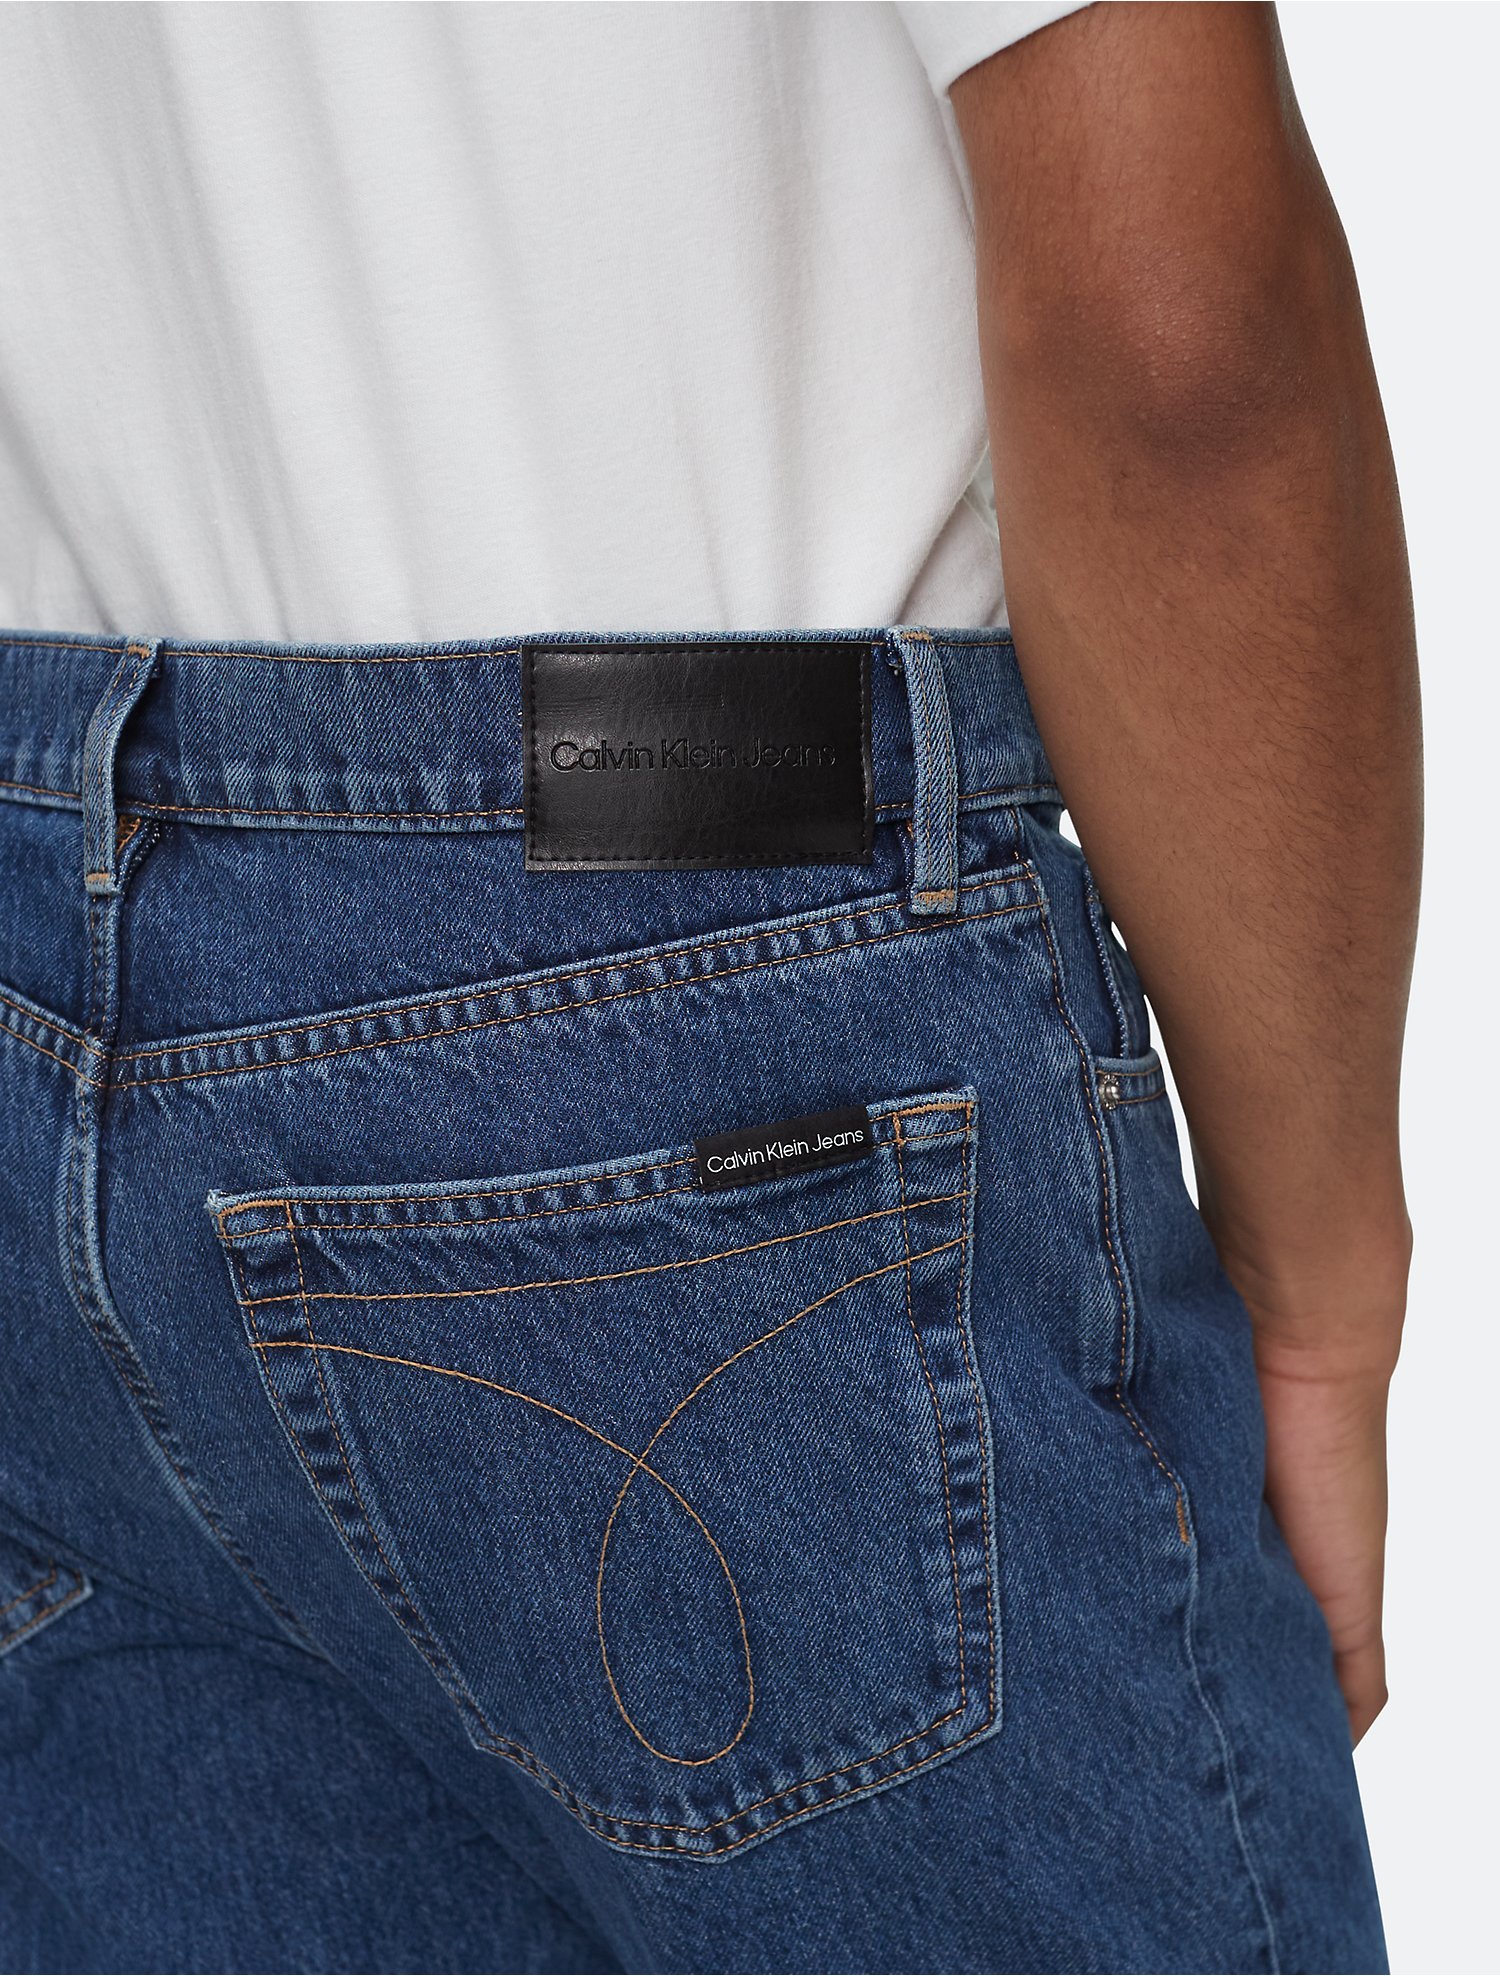 Descubrir 44+ imagen calvin klein jeans price